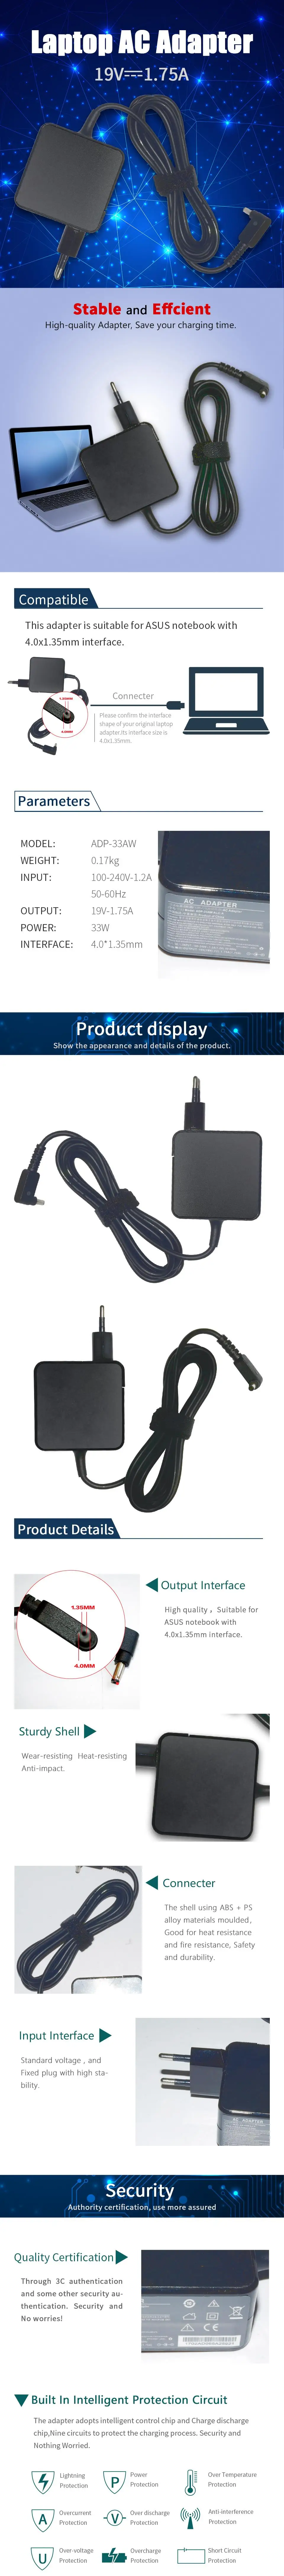 JIGU AC Питание 19 V 1.75A 4,0*1,35 мм Тетрадь ноутбук адаптер Зарядное устройство для Asus F201 F201E F202 F202E S200E